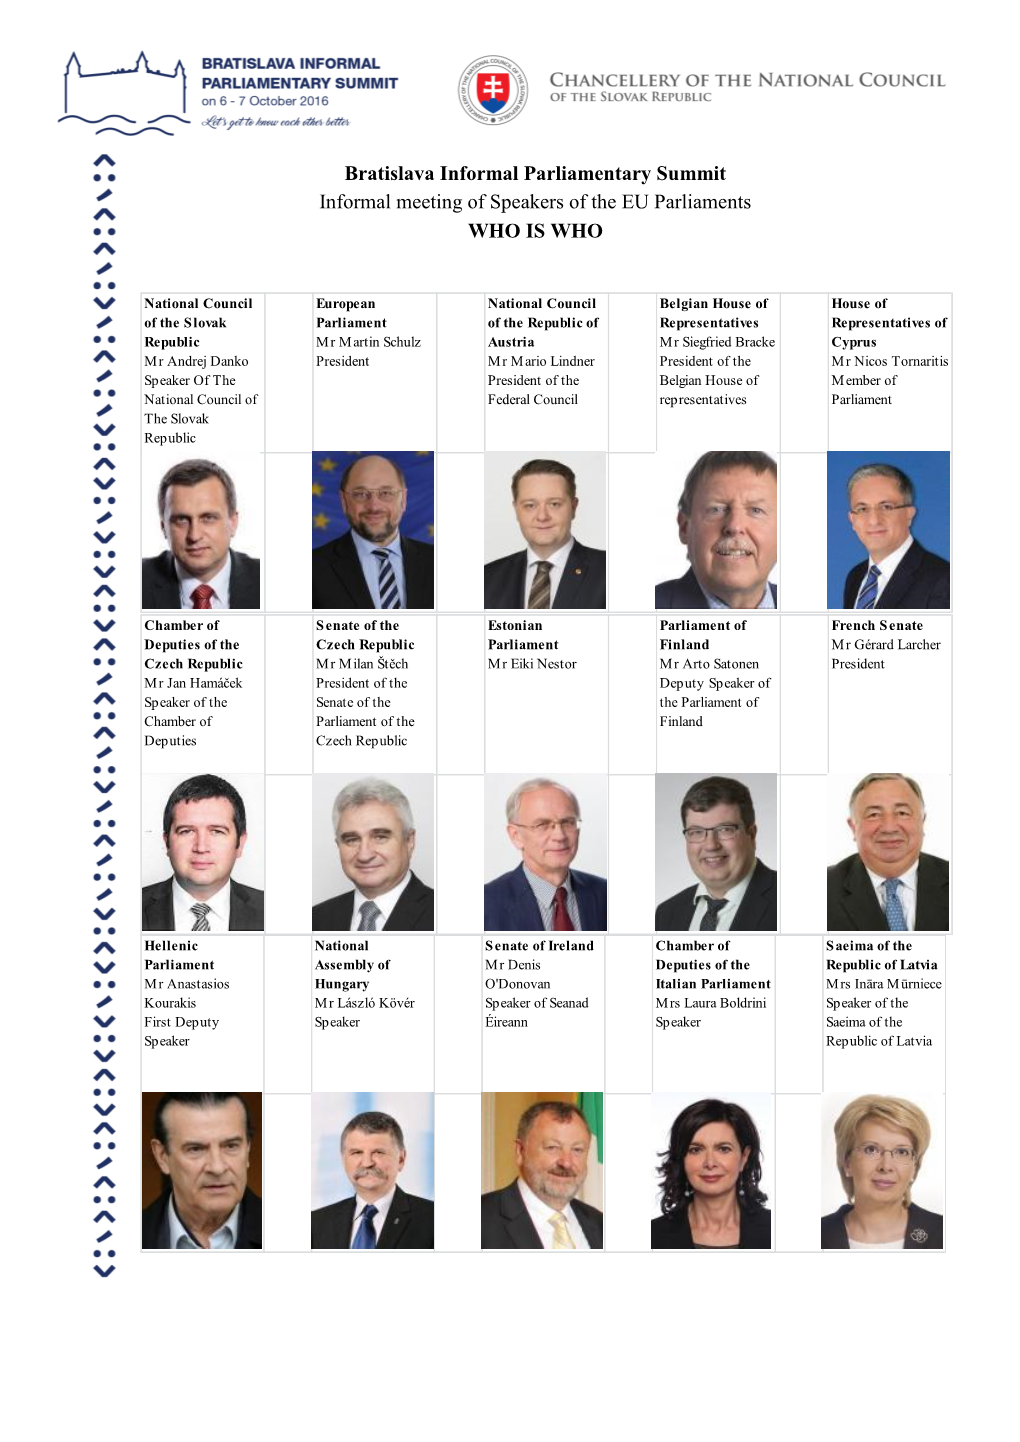 Who IS WHO Bratislava Parliamentary Summit 6-7 10 (Pdf)